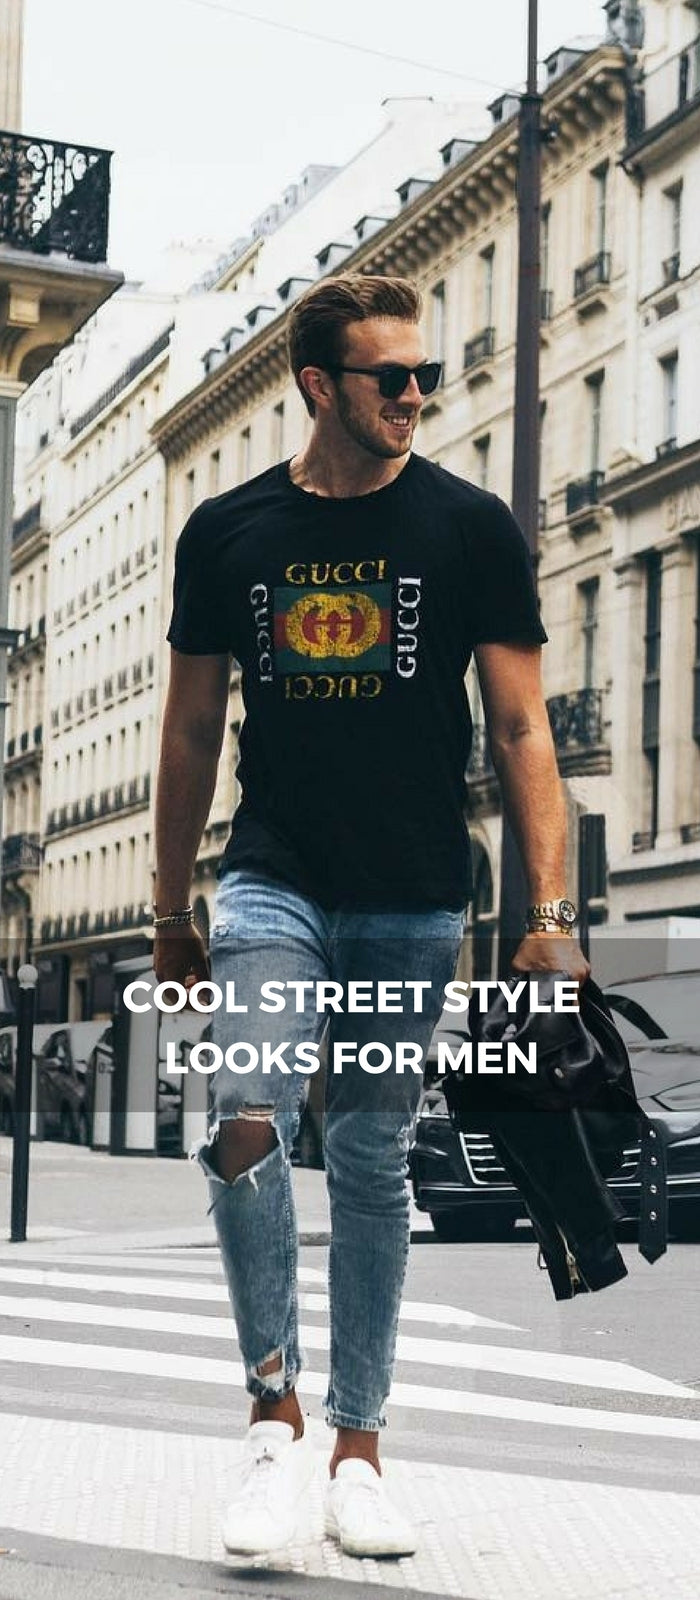 Cool street style looks for men